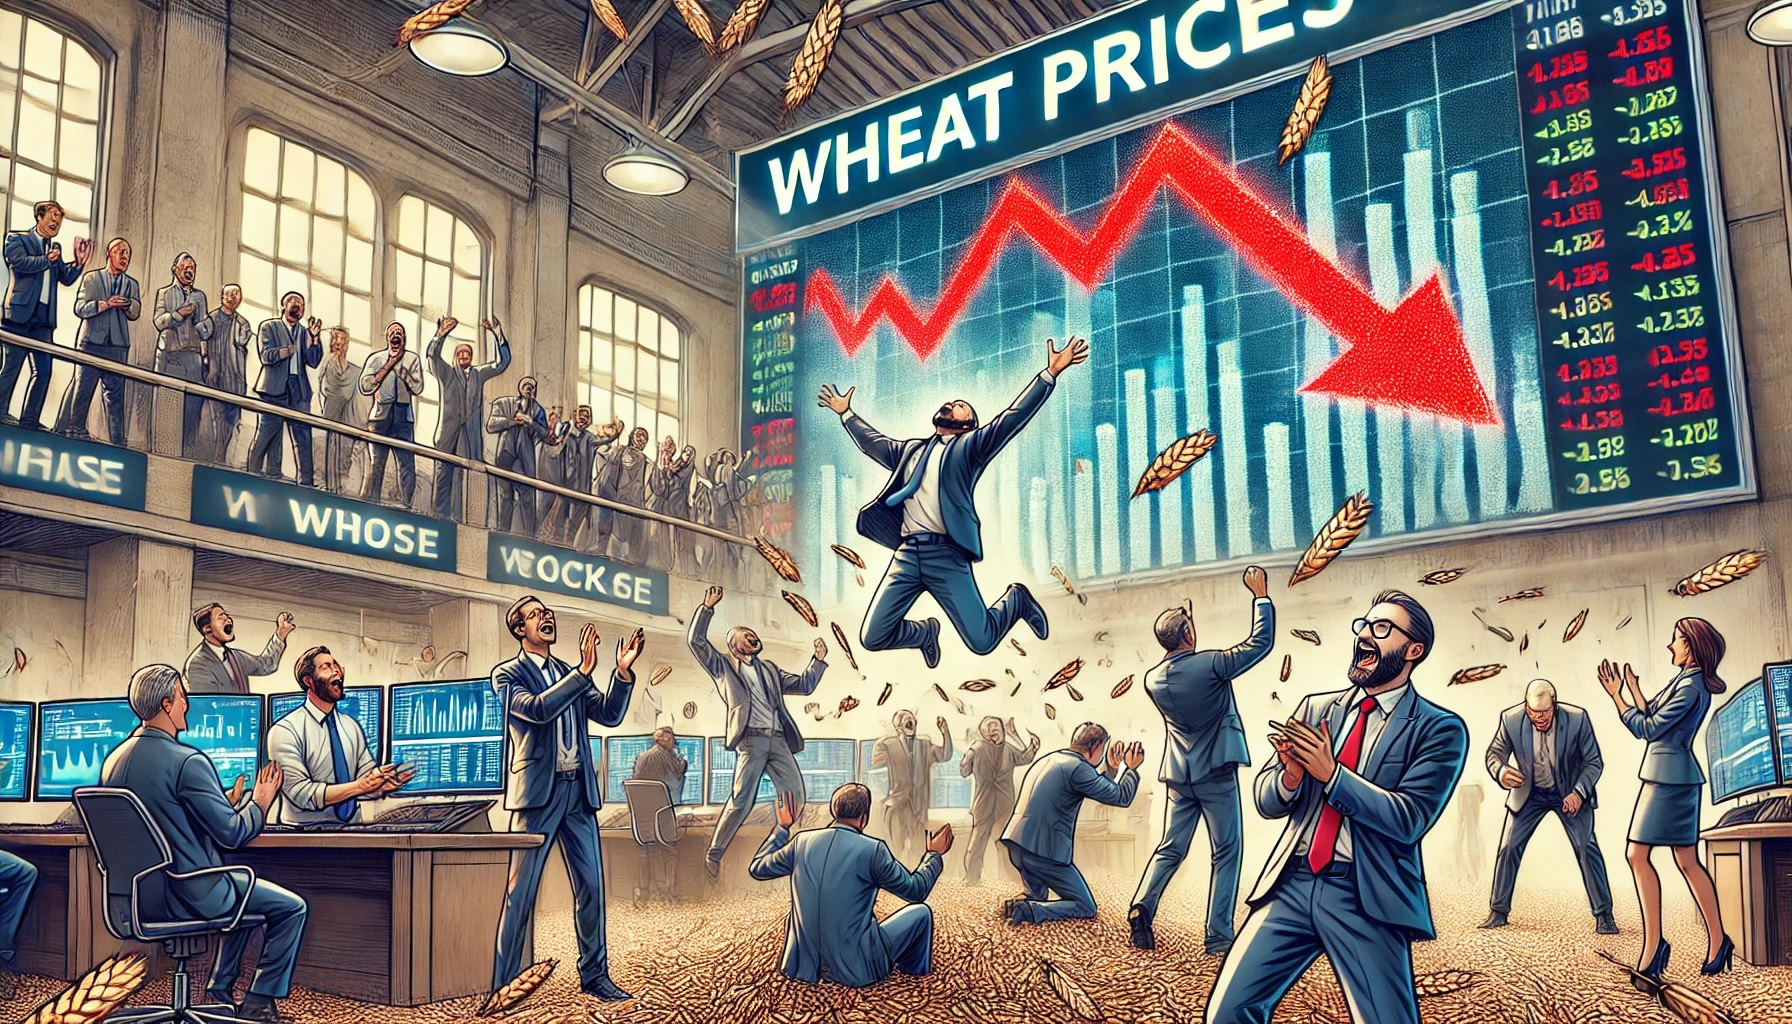 Broker reagieren auf den Preisverfall bei Weizen an der Börse. HRW-Weizen
US-Mais
Futures-Märkte
Internationale Getreiderat